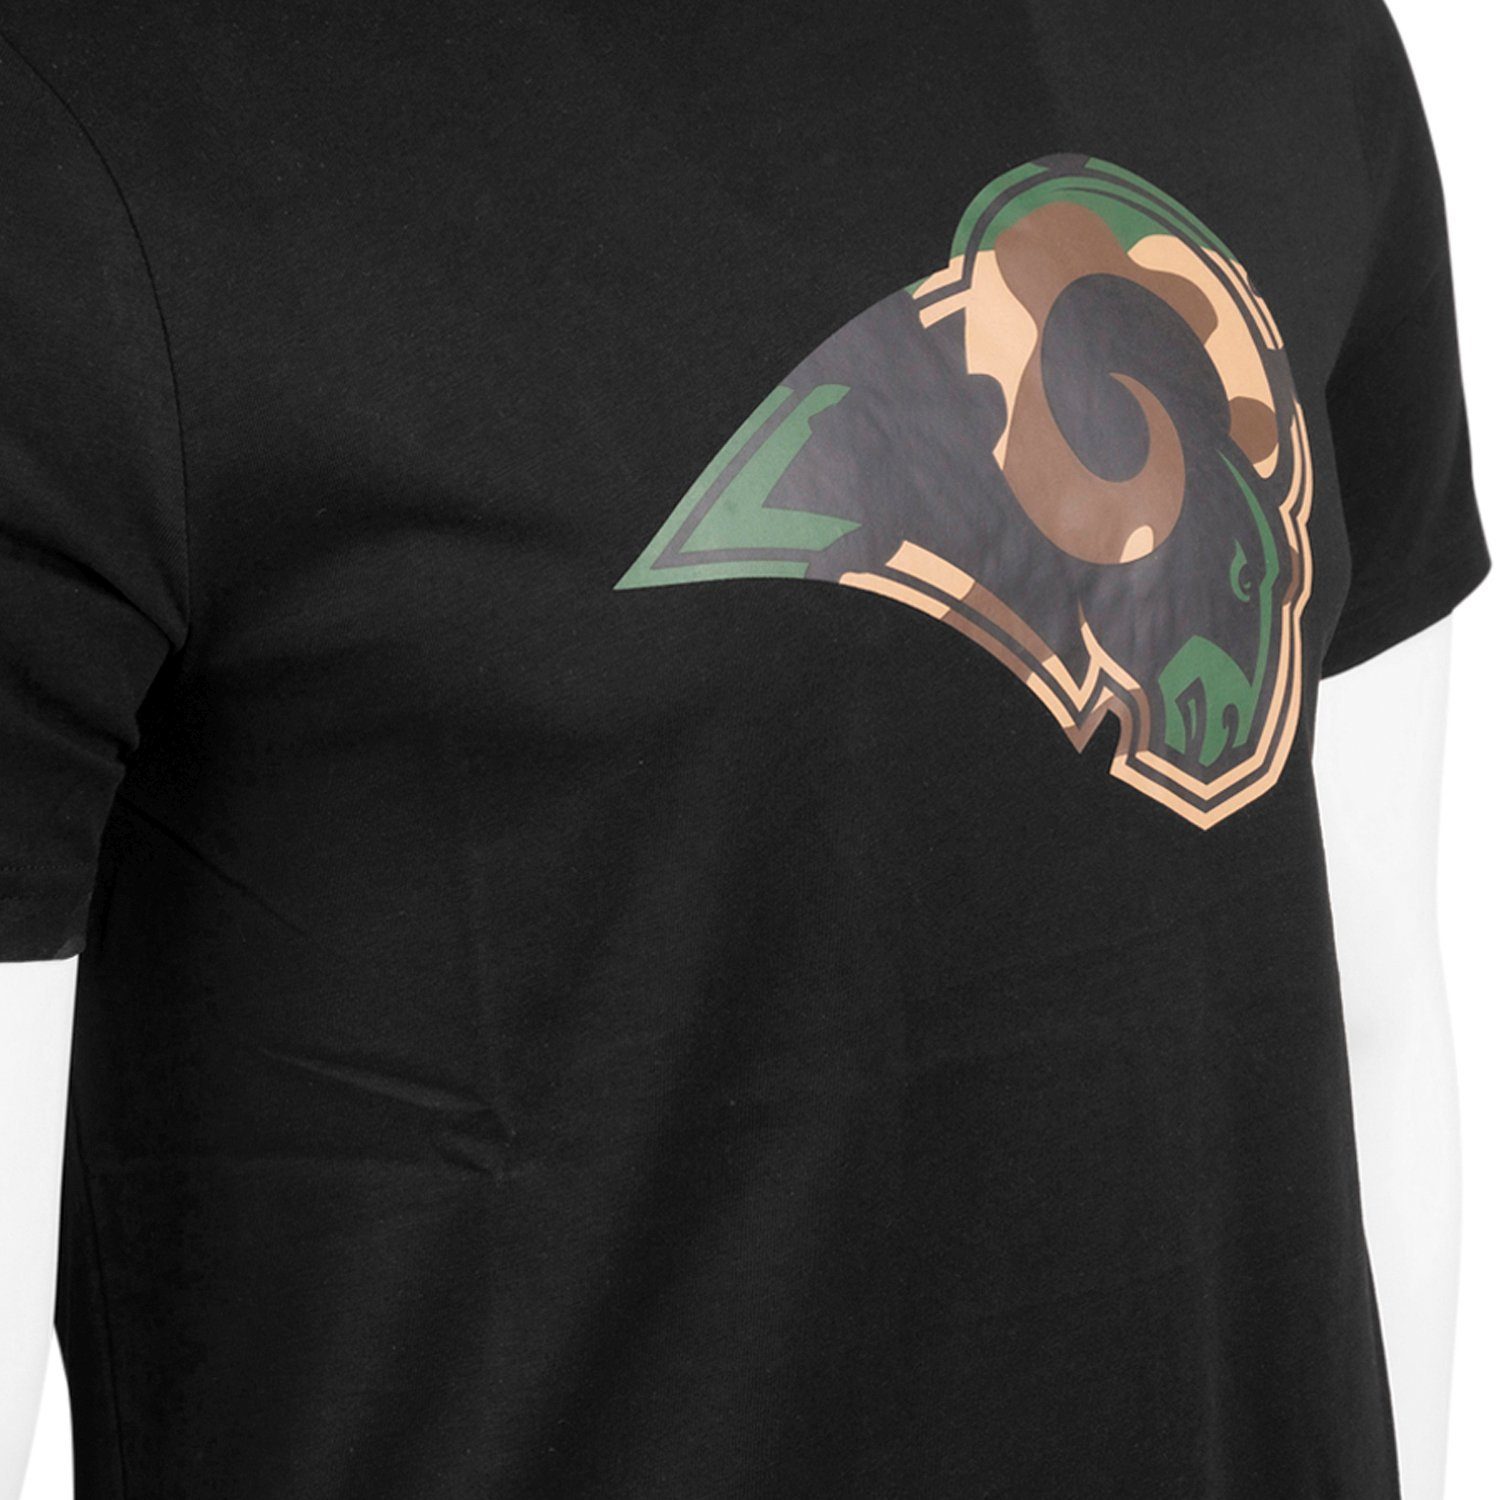 New Era Print-Shirt Football Rams NFL Los Angeles Teams